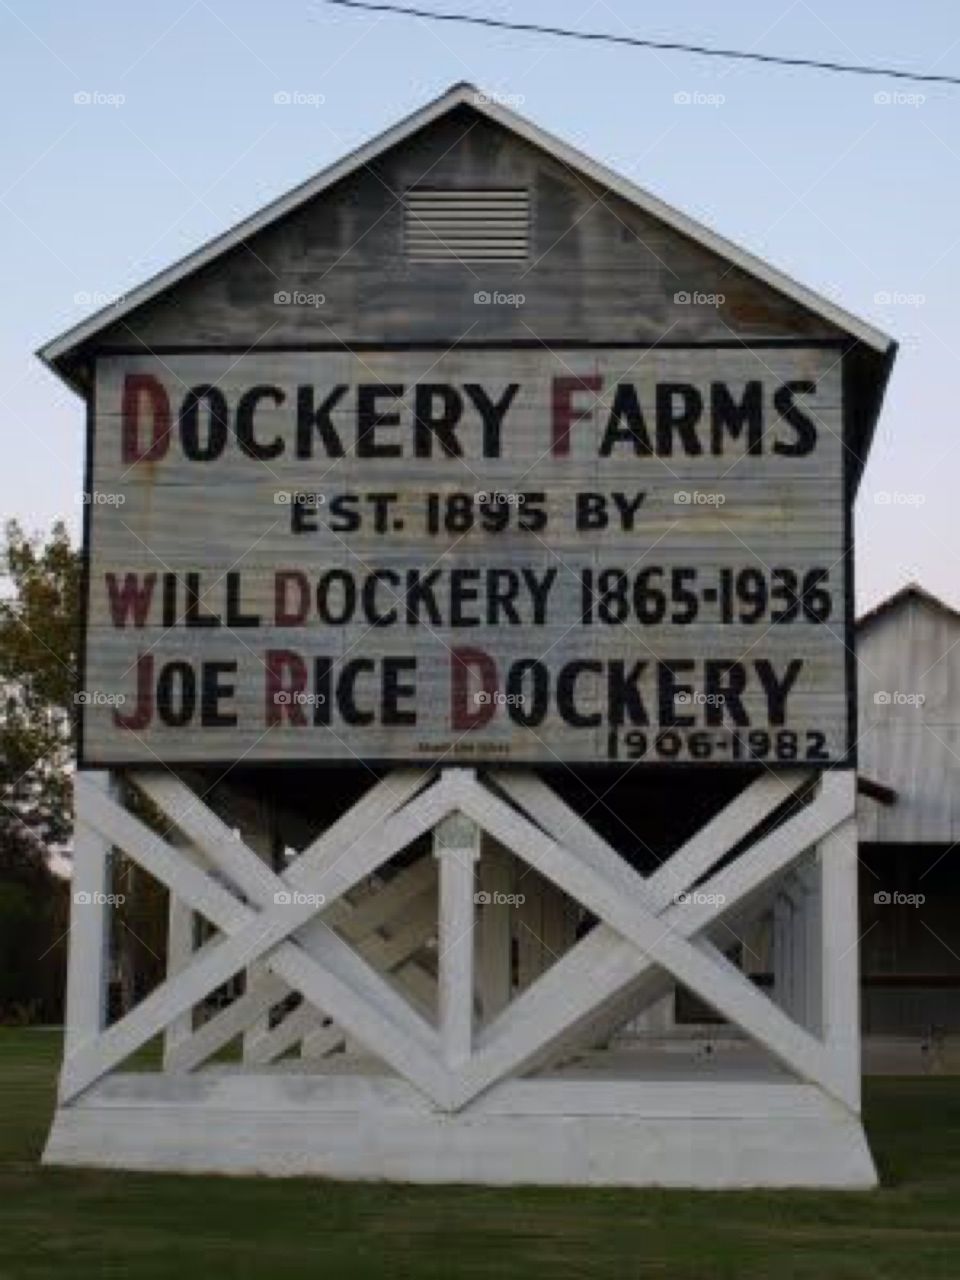 Dockery farms